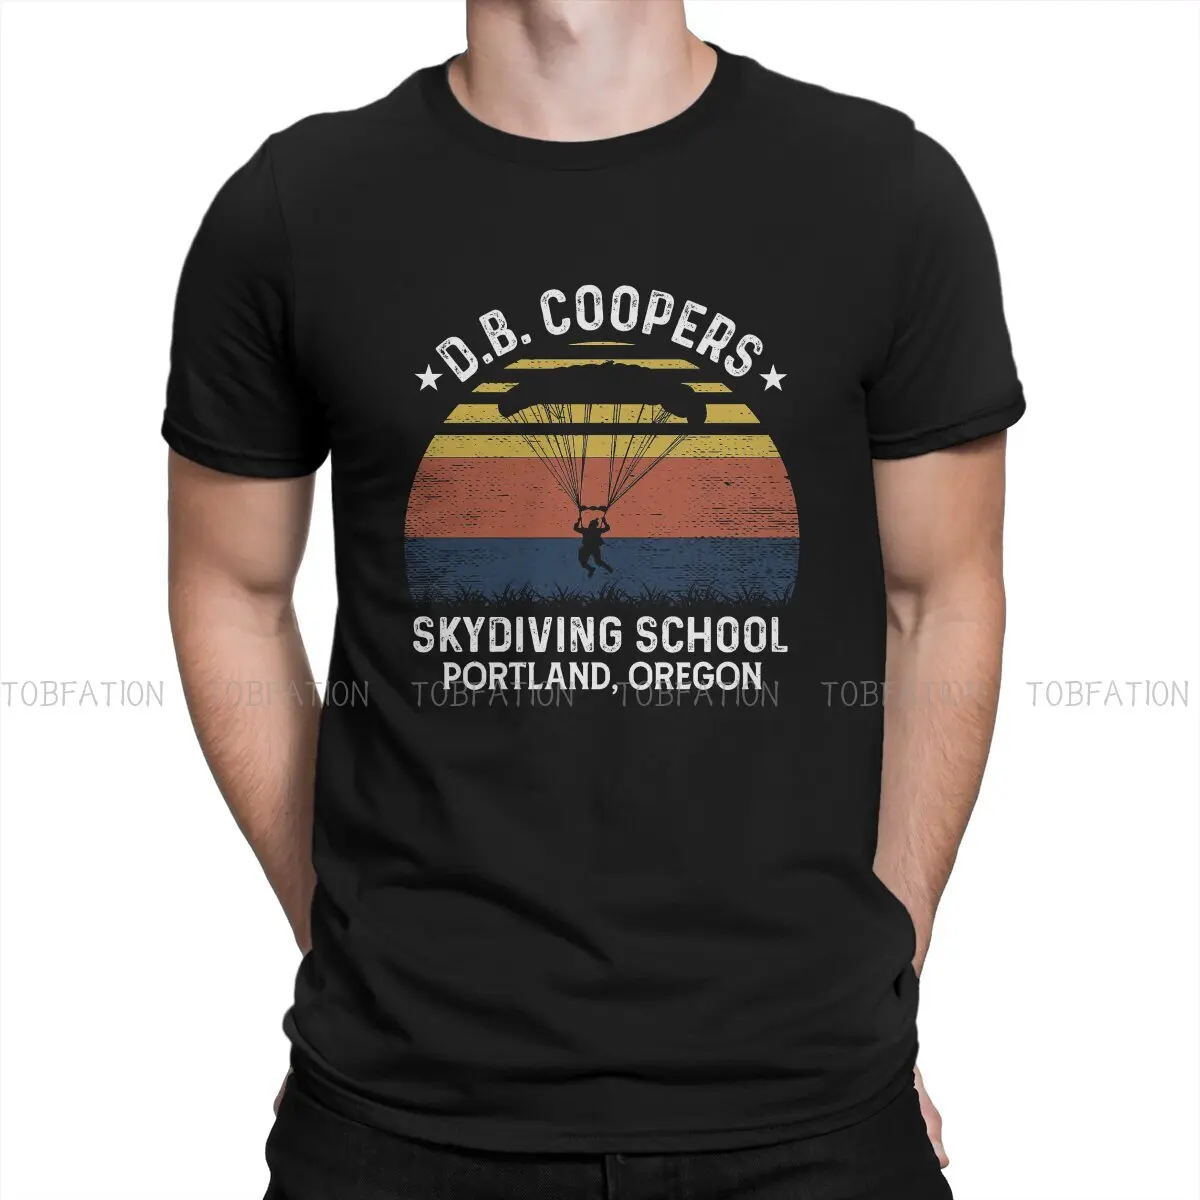 

DB Cooper Hijack TShirt for Men Parachute Humor Summer Tee T Shirt Novelty New Design Loose